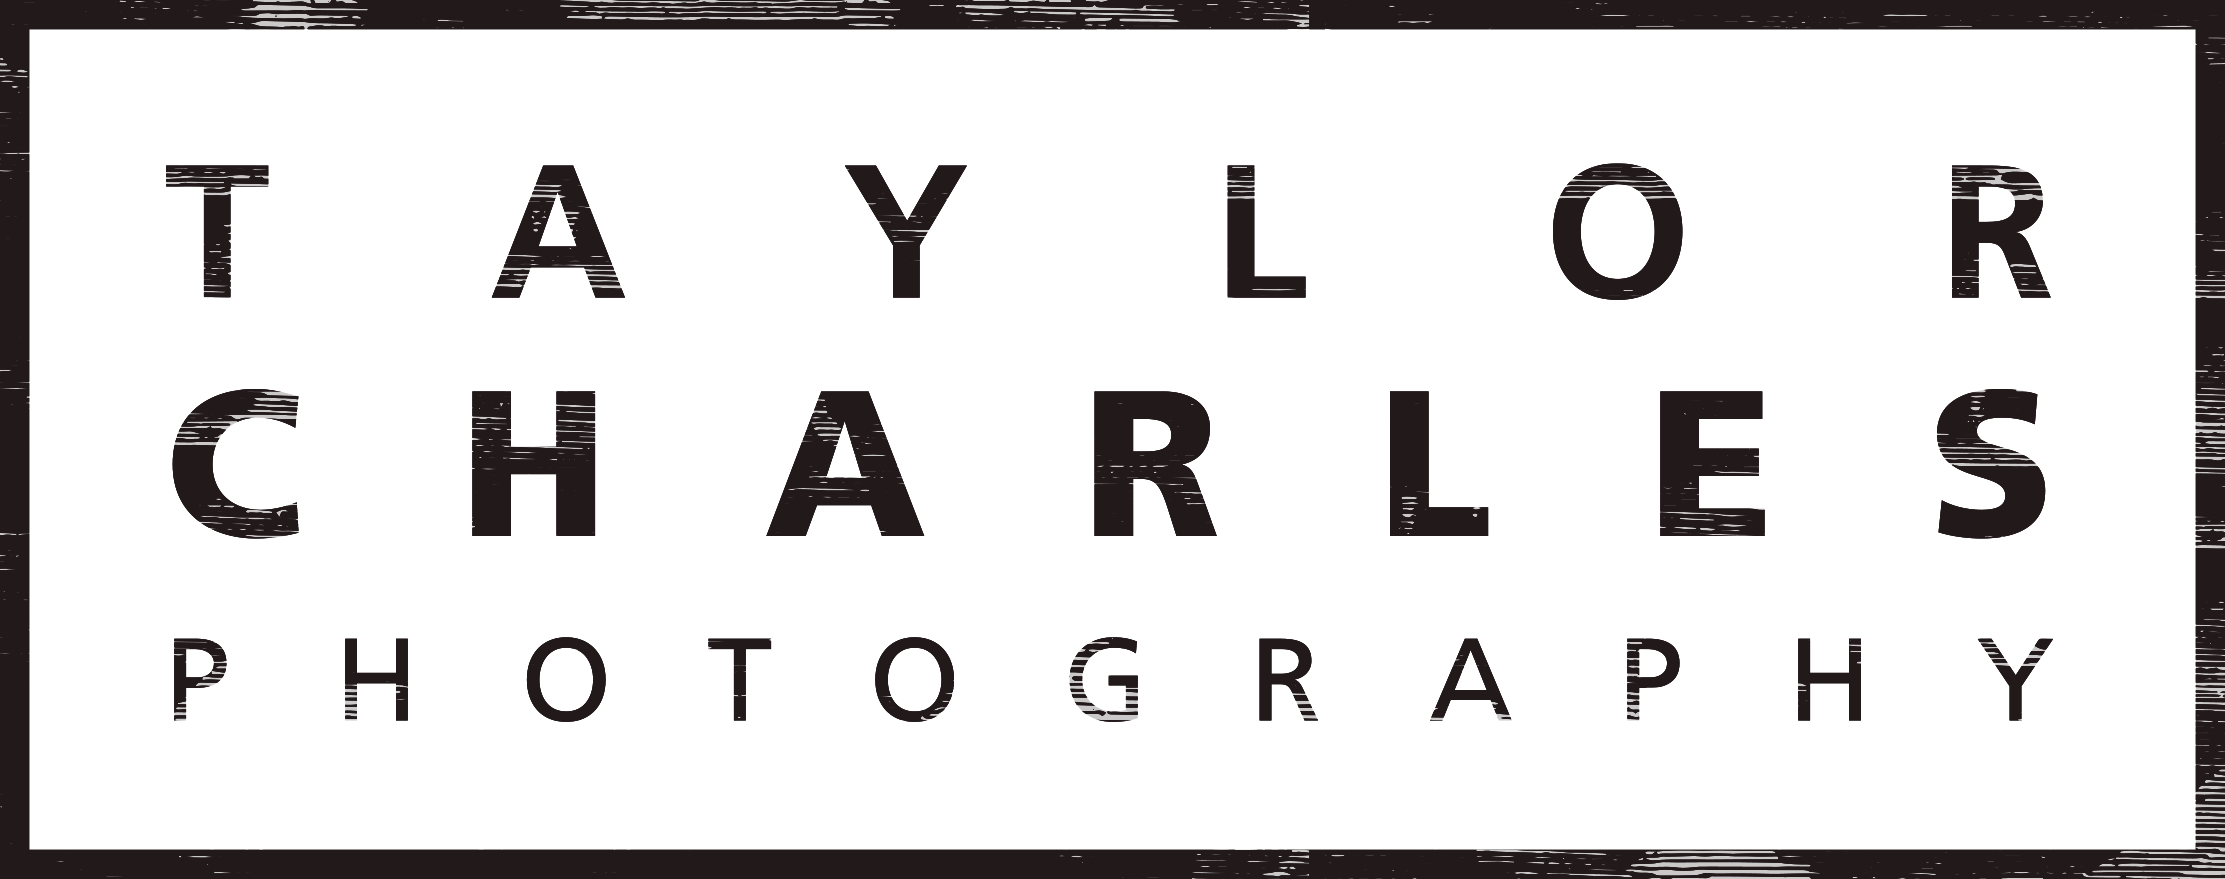 Taylor Charles Photography